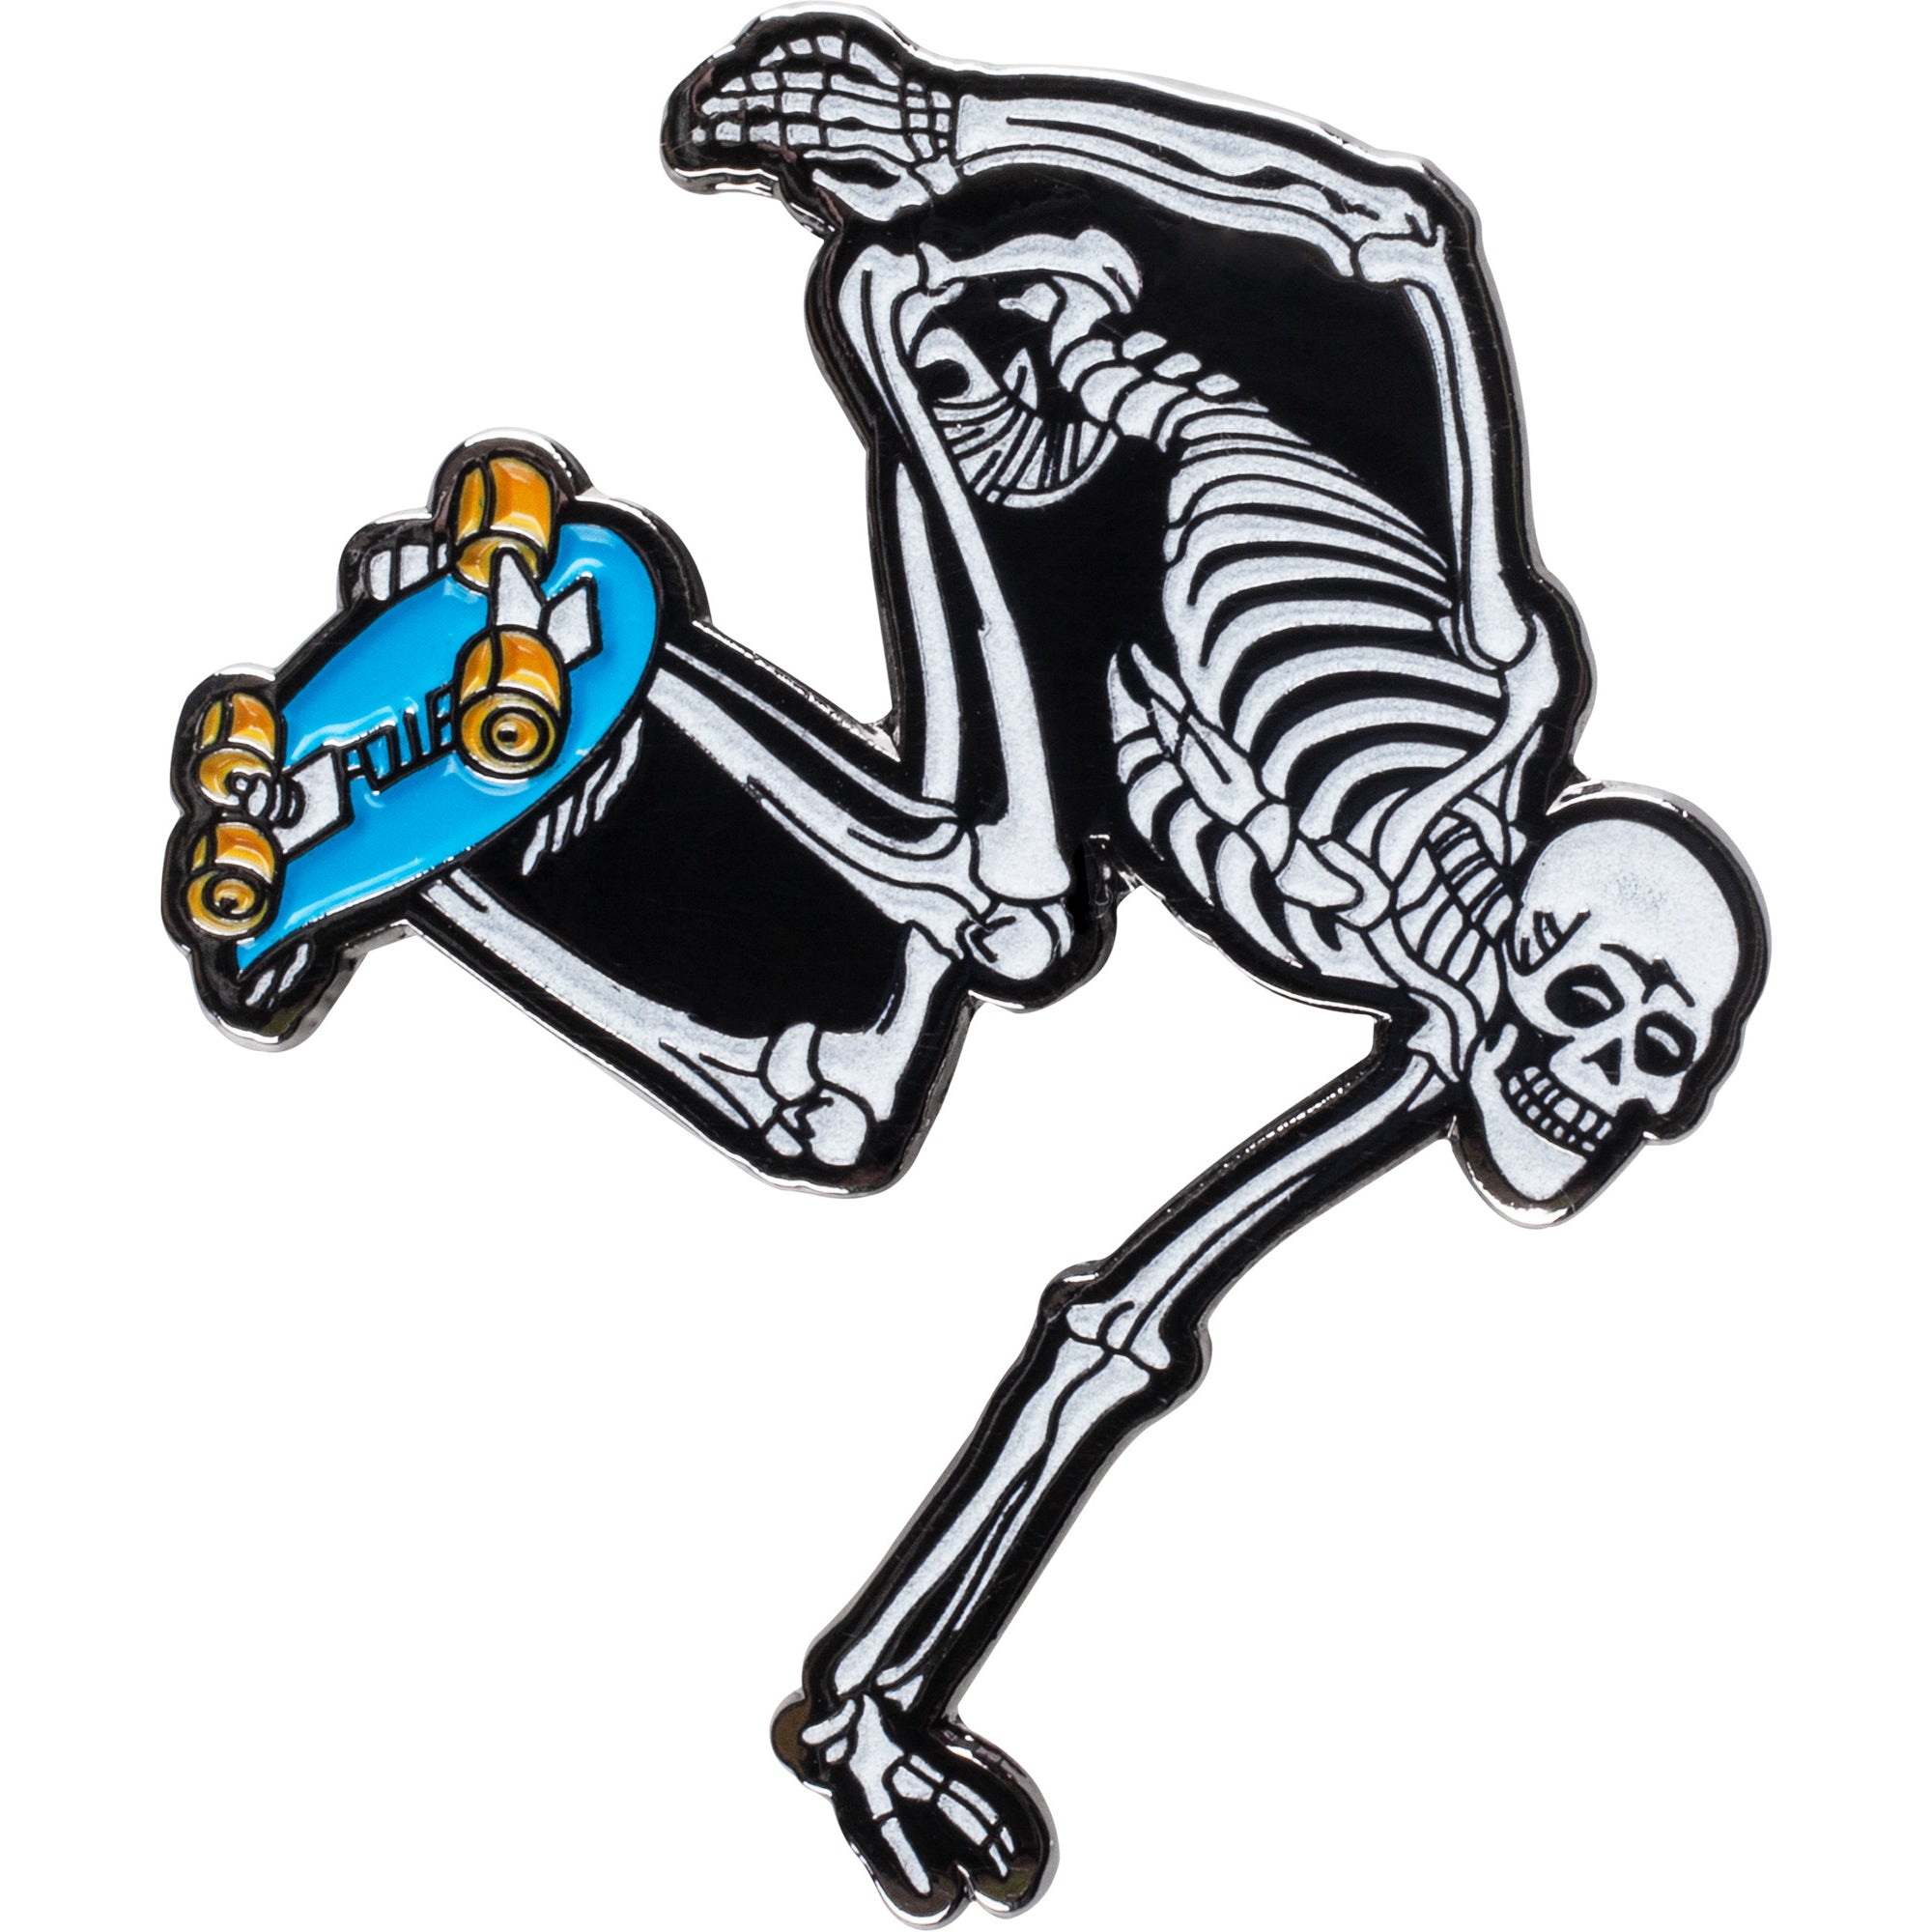 Glow in the dark Powell Peralta Skateboarding Skeleton